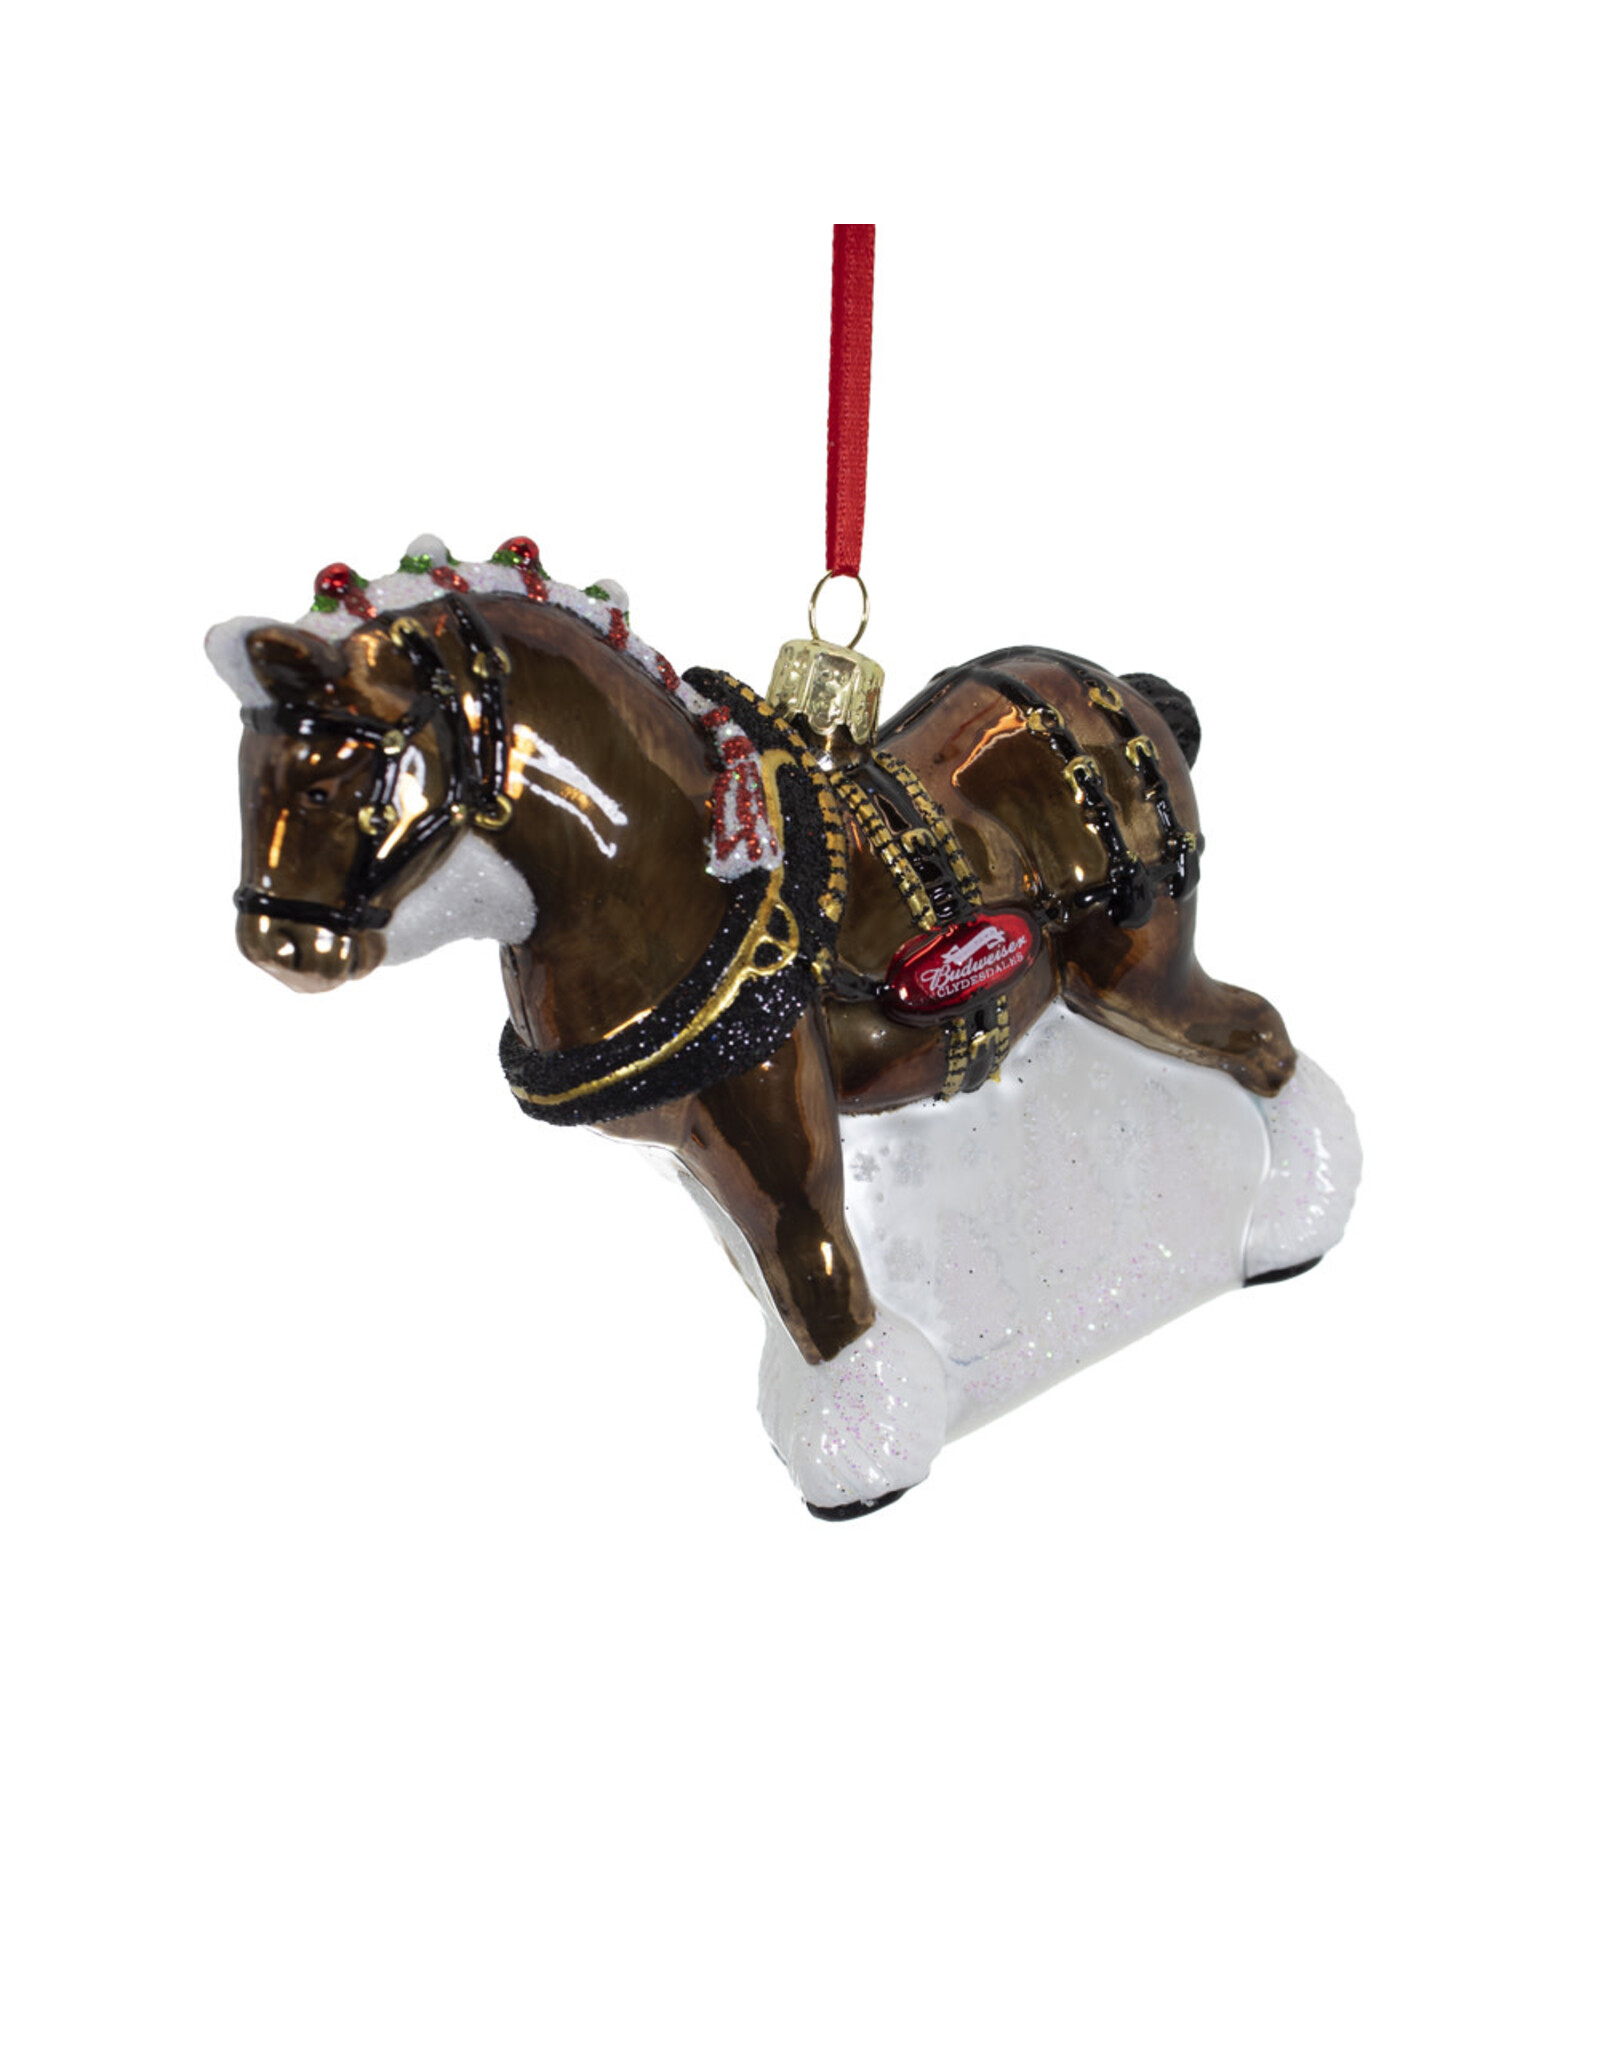 Kurt Adler Budweiser Glass Clydesdale Horse Christmas Tree Ornament